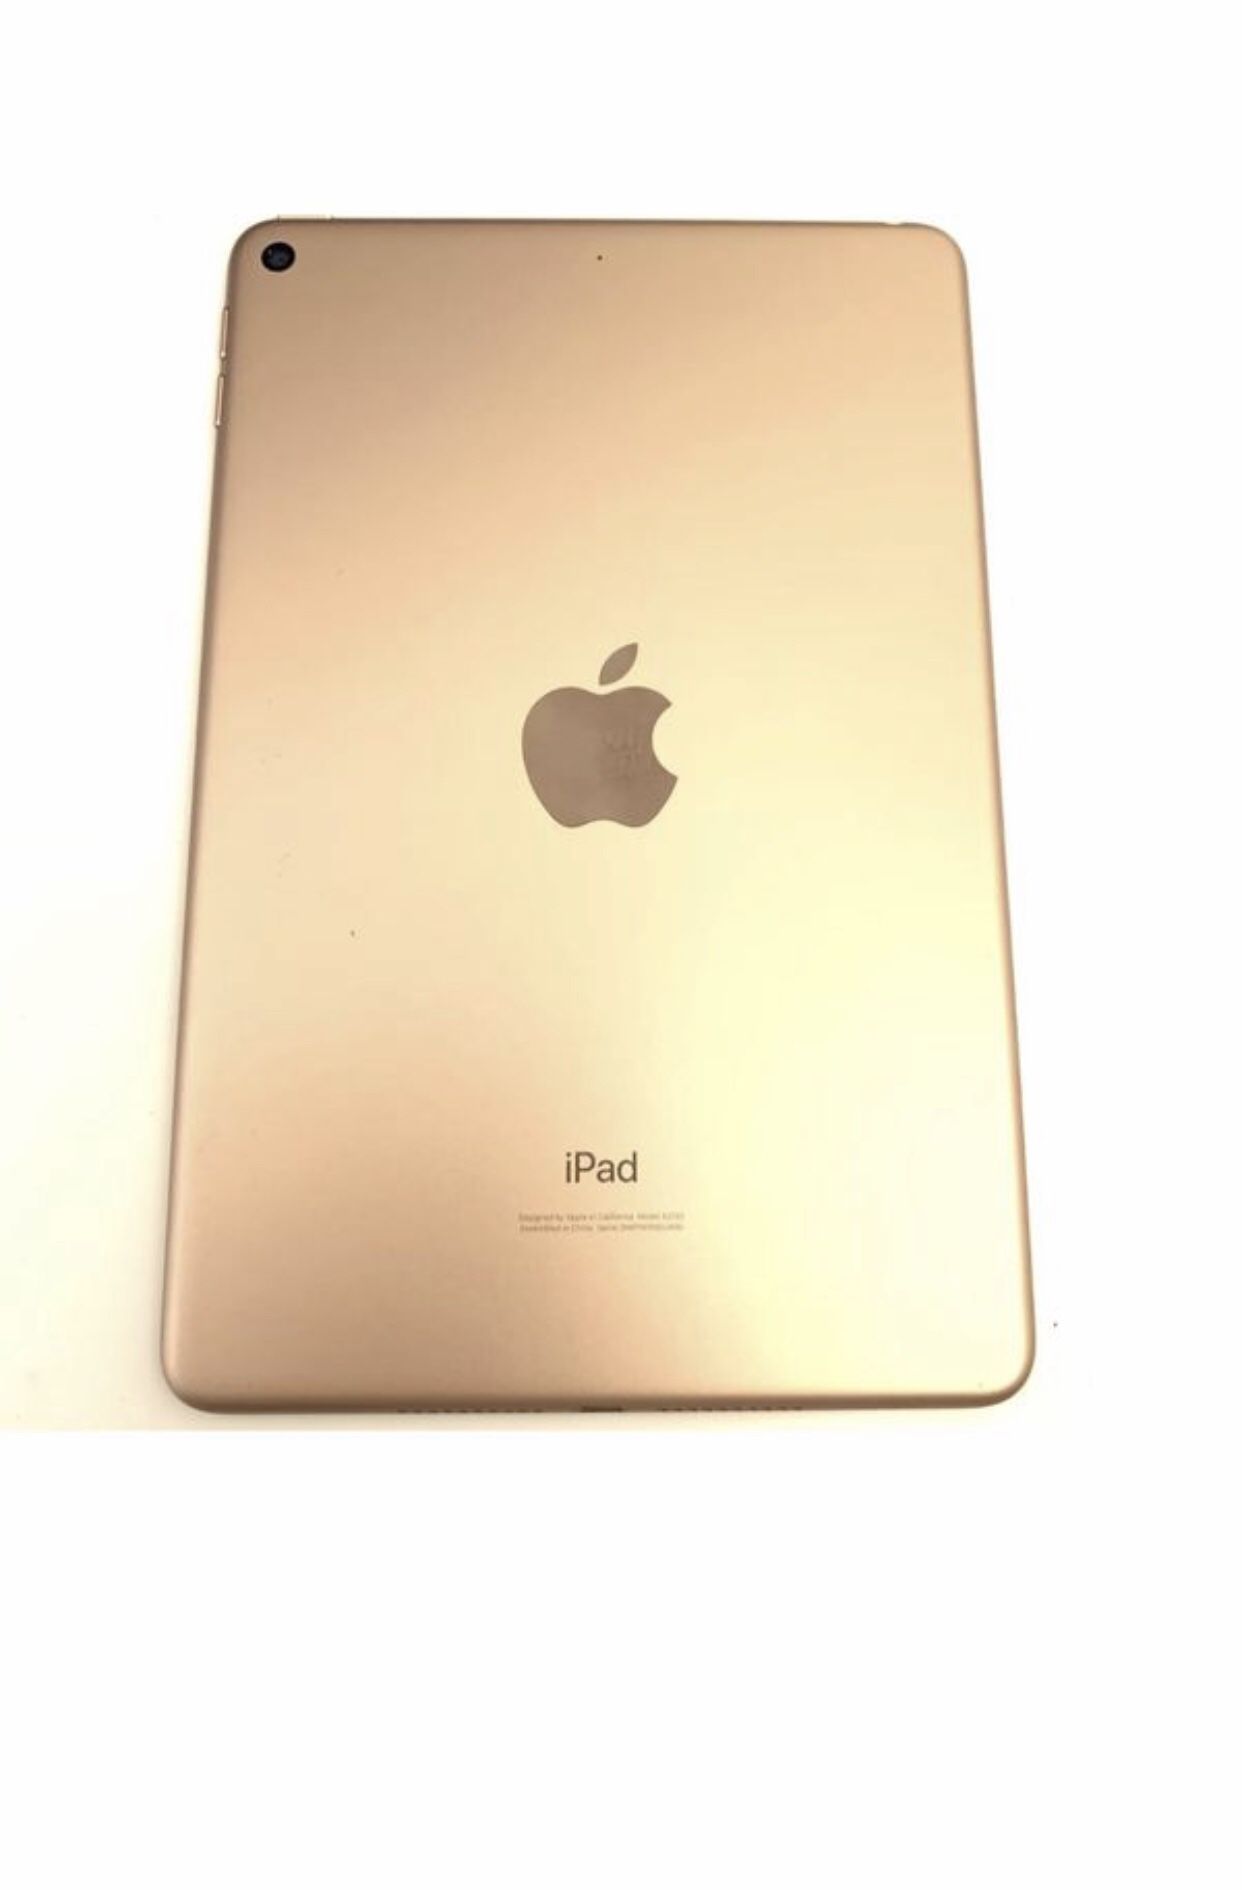 iPad mini 5th generation rose gold WiFi plus cellular it is iCloud locked 🔒